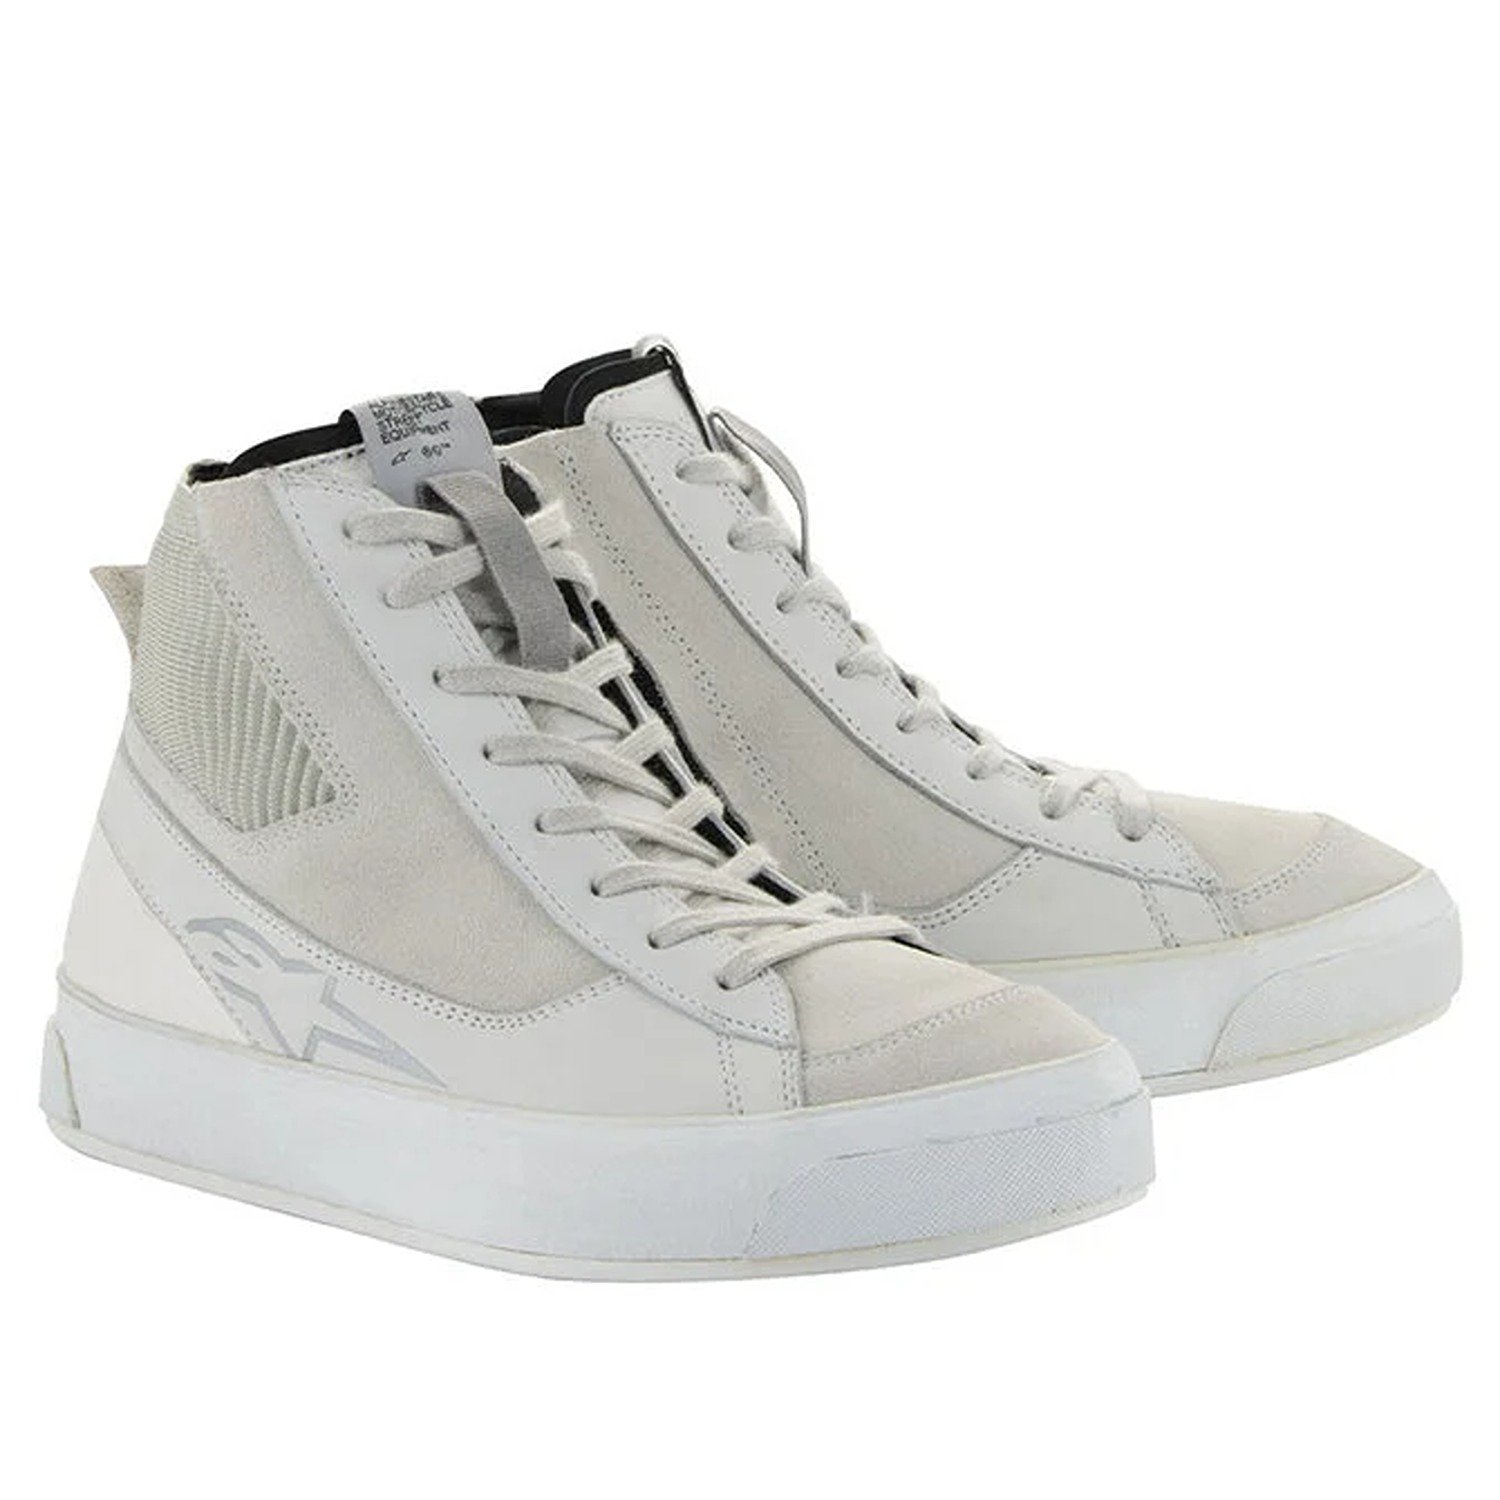 Image of Alpinestars Stella Stated Podium Shoes White Cool Gray Größe US 115